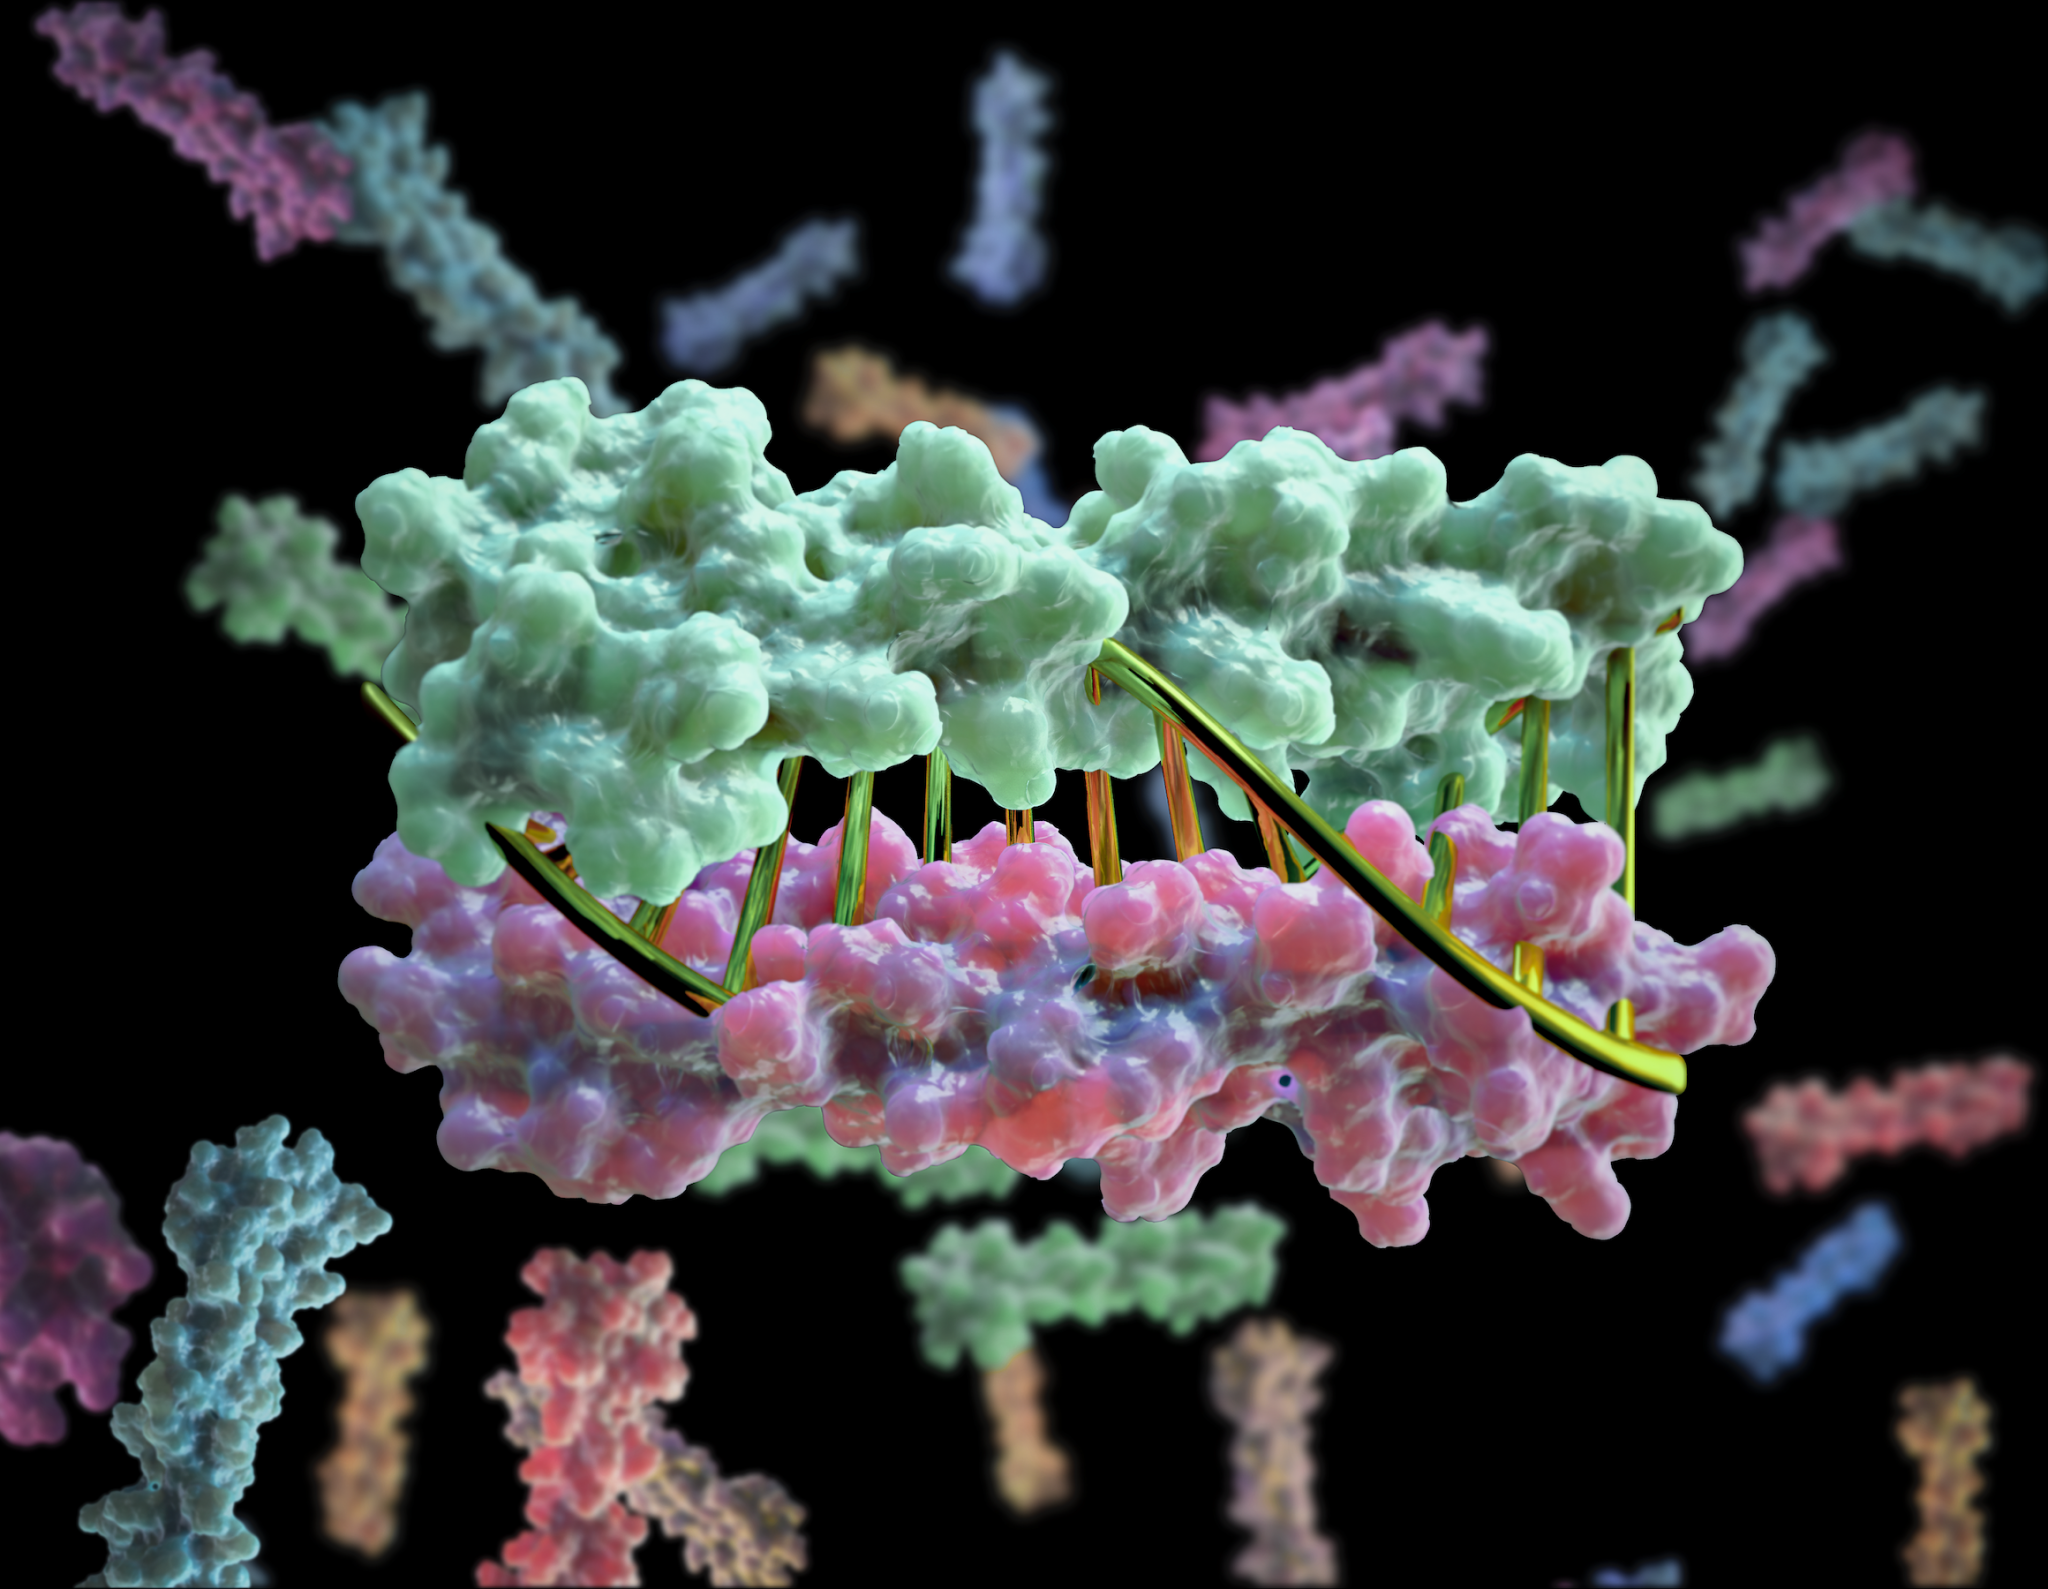 New designer proteins mimic DNA